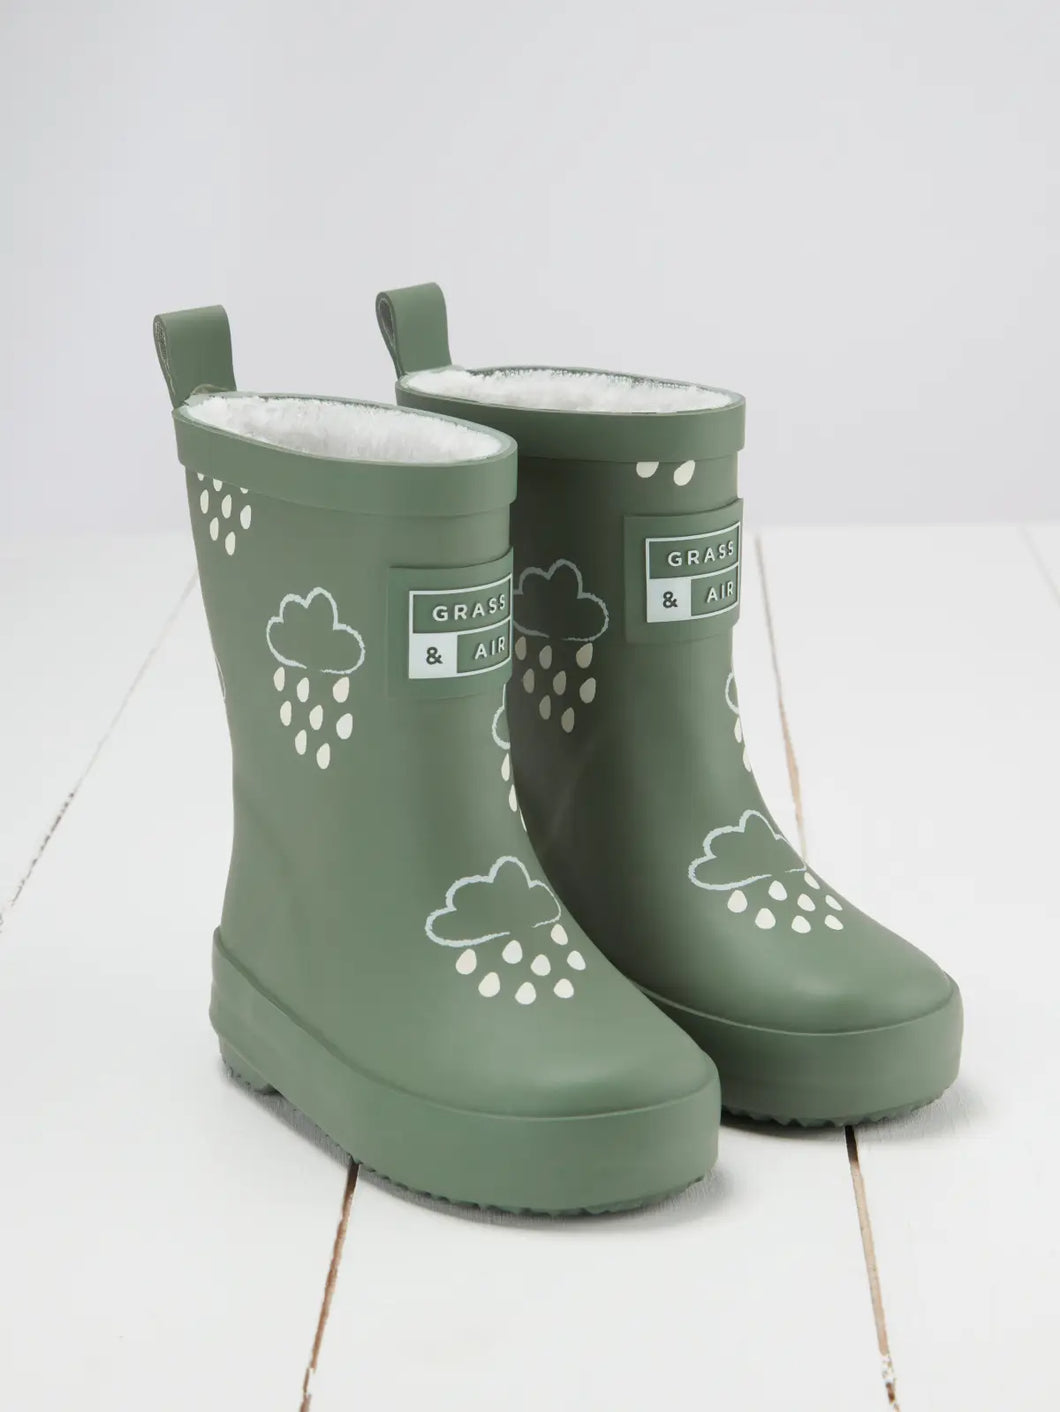 Khaki Green Rain boots lined with teddy fleece. 